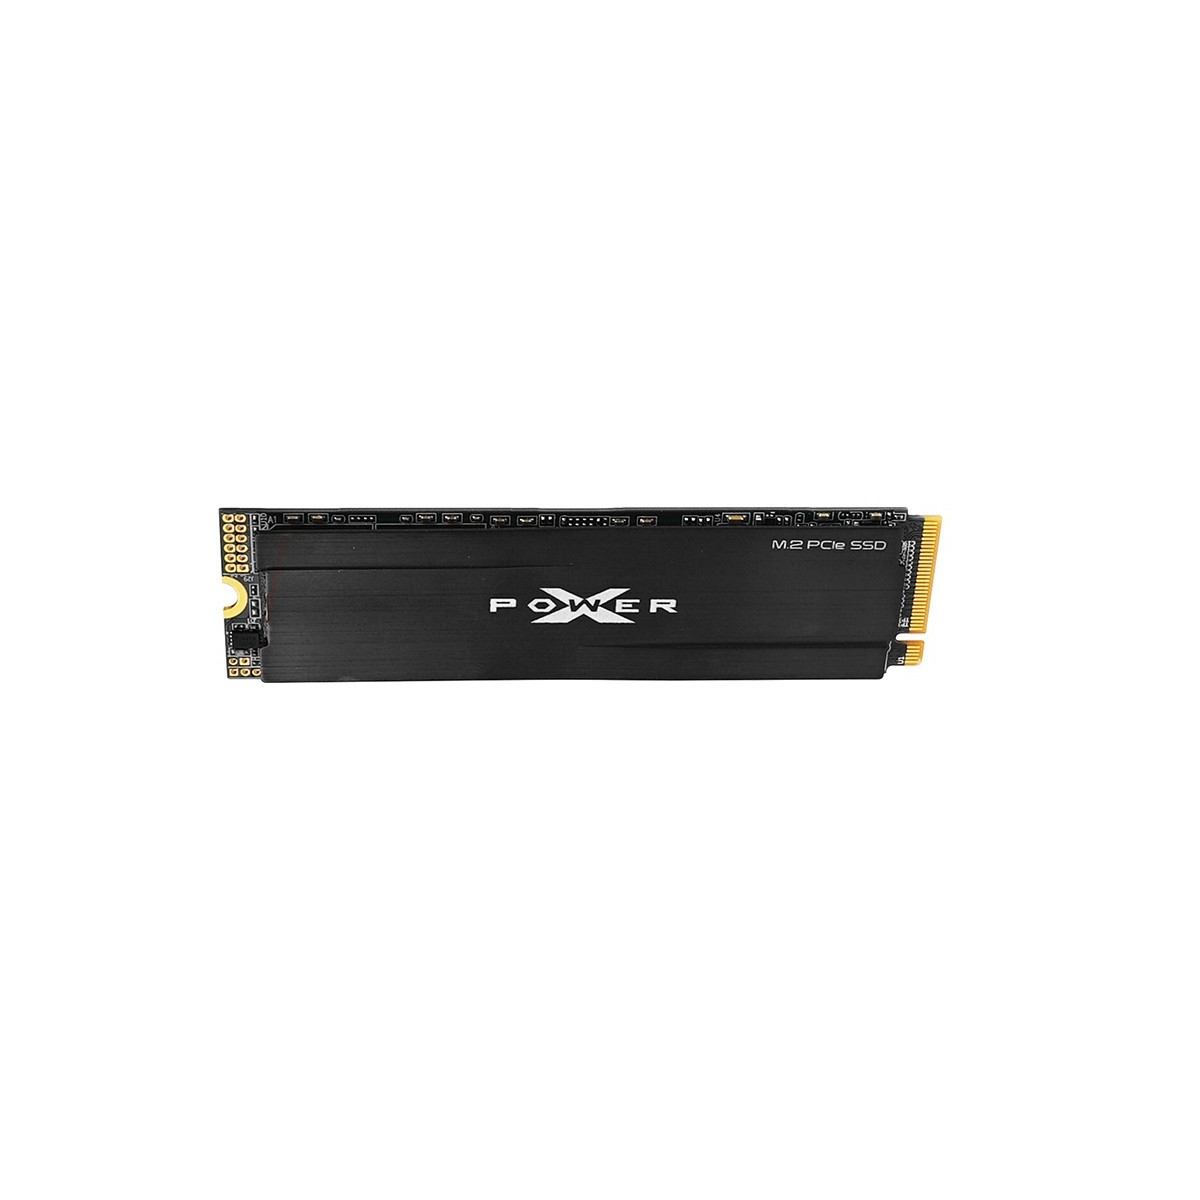 Silicon Power Dysk SSD XD80 2TB heatsink 3D TLC 3400/3000 MB/s M.2 2280 PCIe - Solid State Disk - 2,000 GB